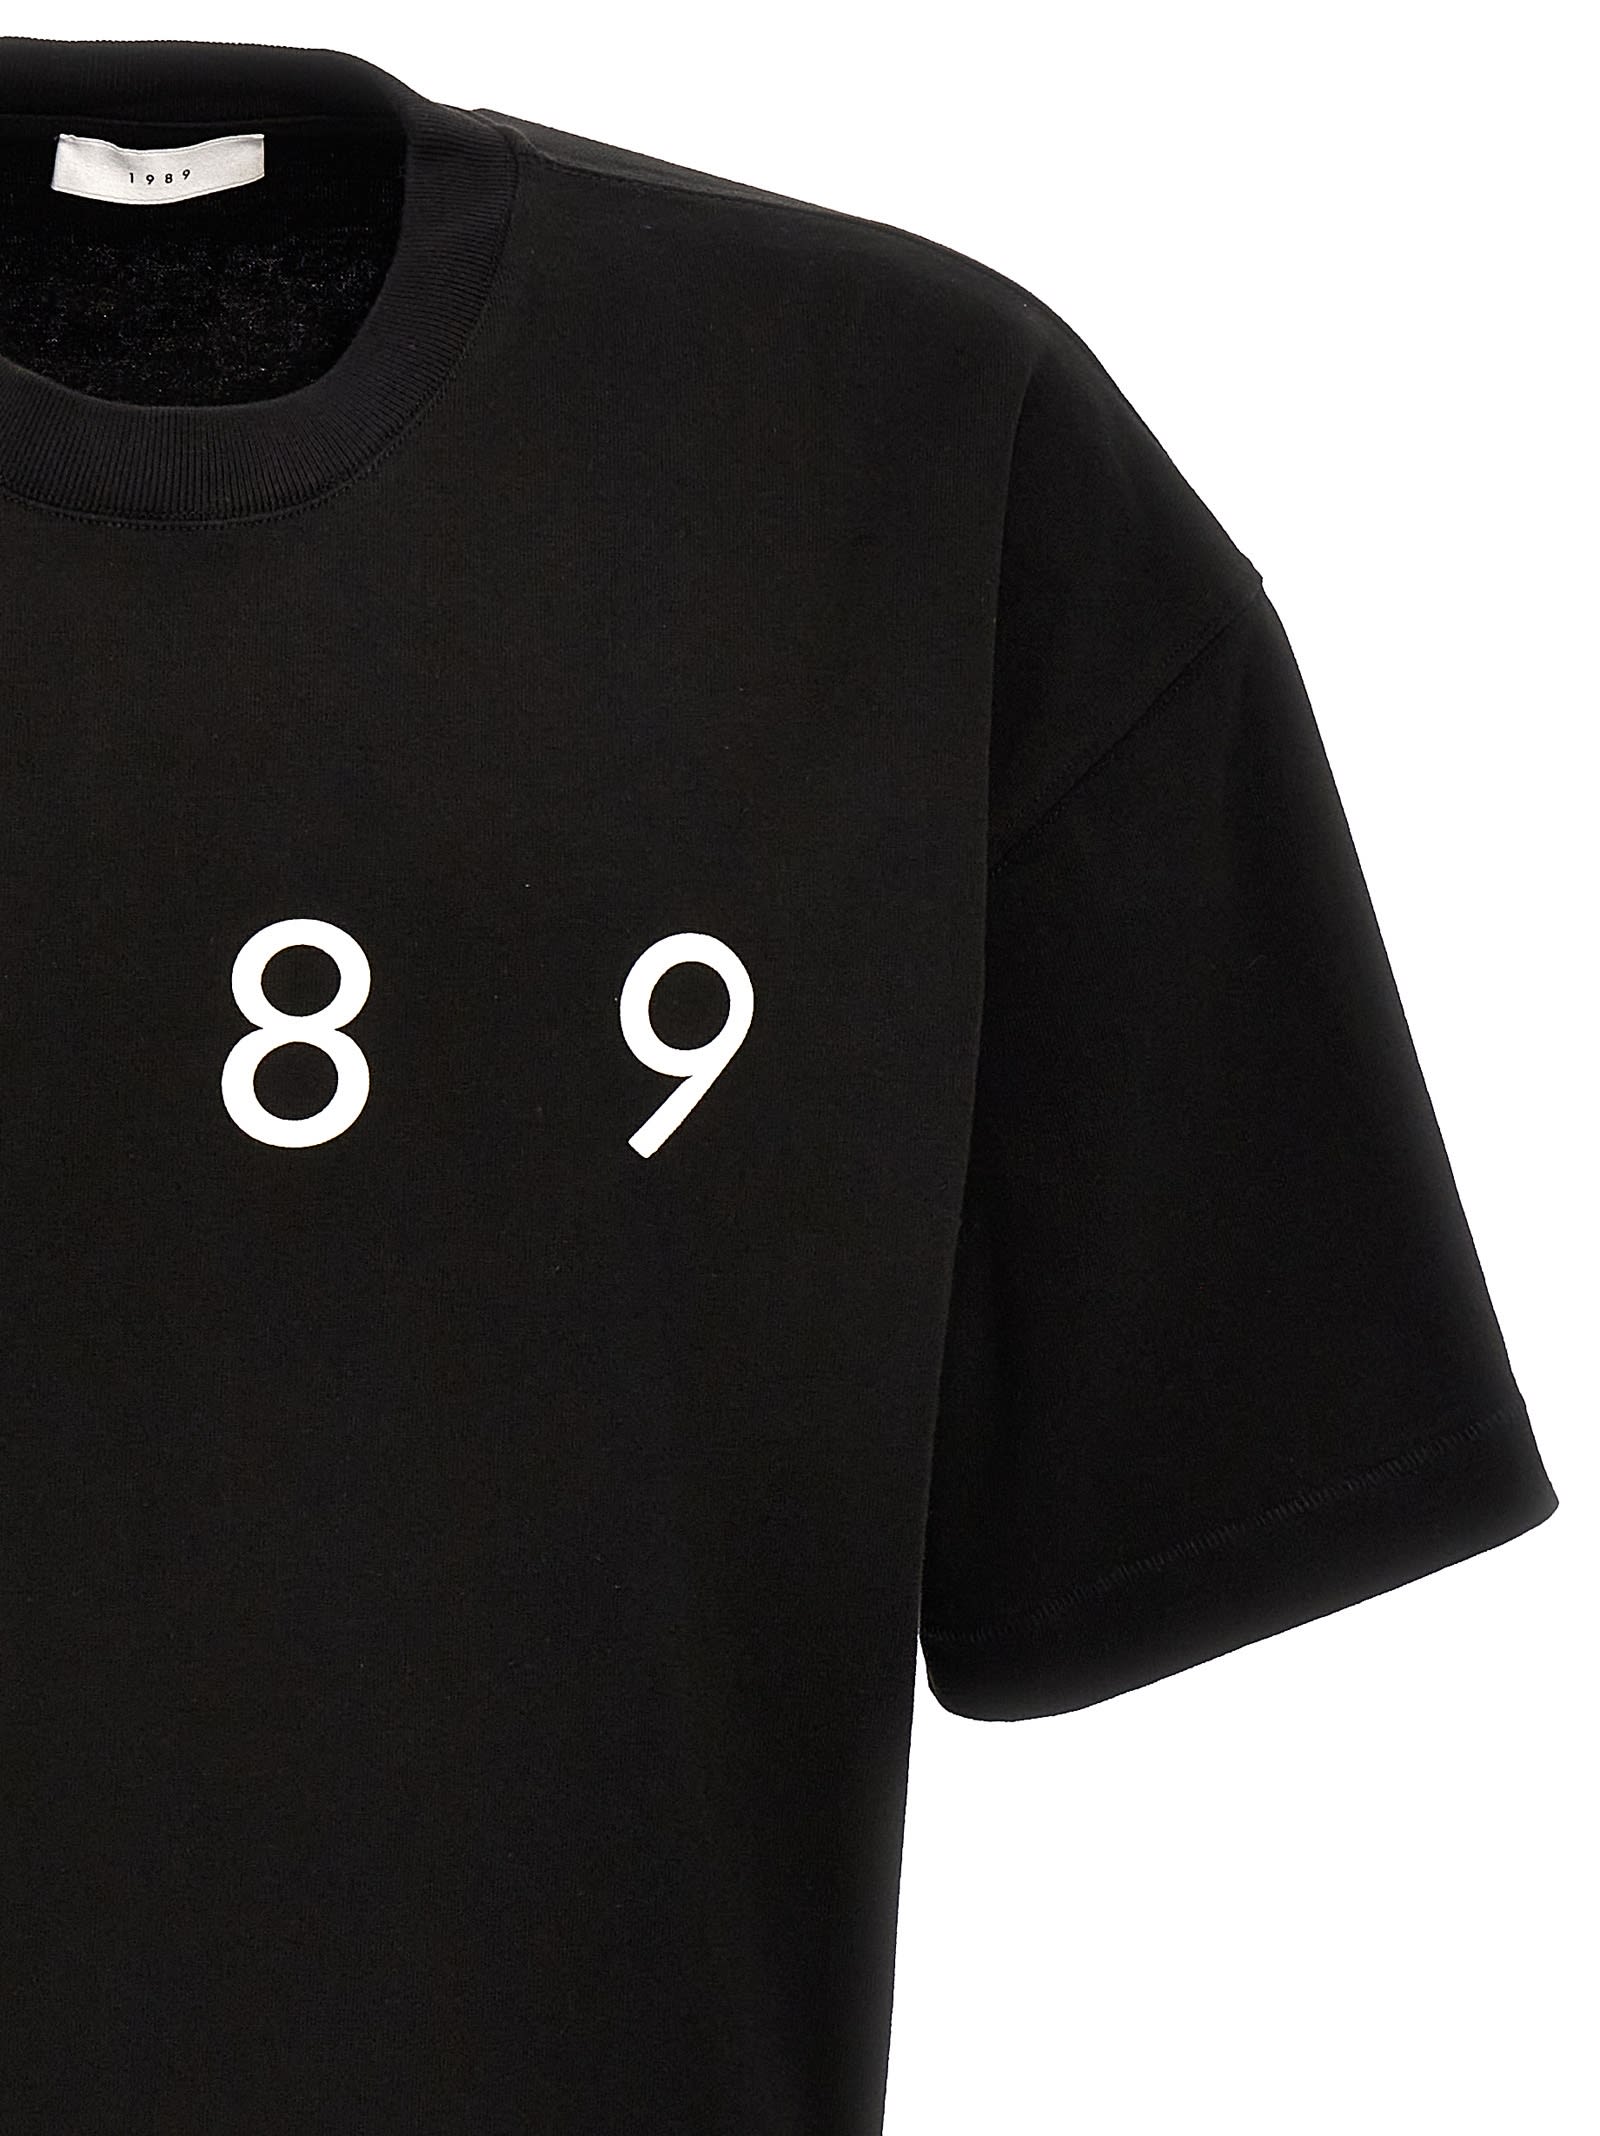 Shop 1989 Studio 1989 Logo T-shirt In Black